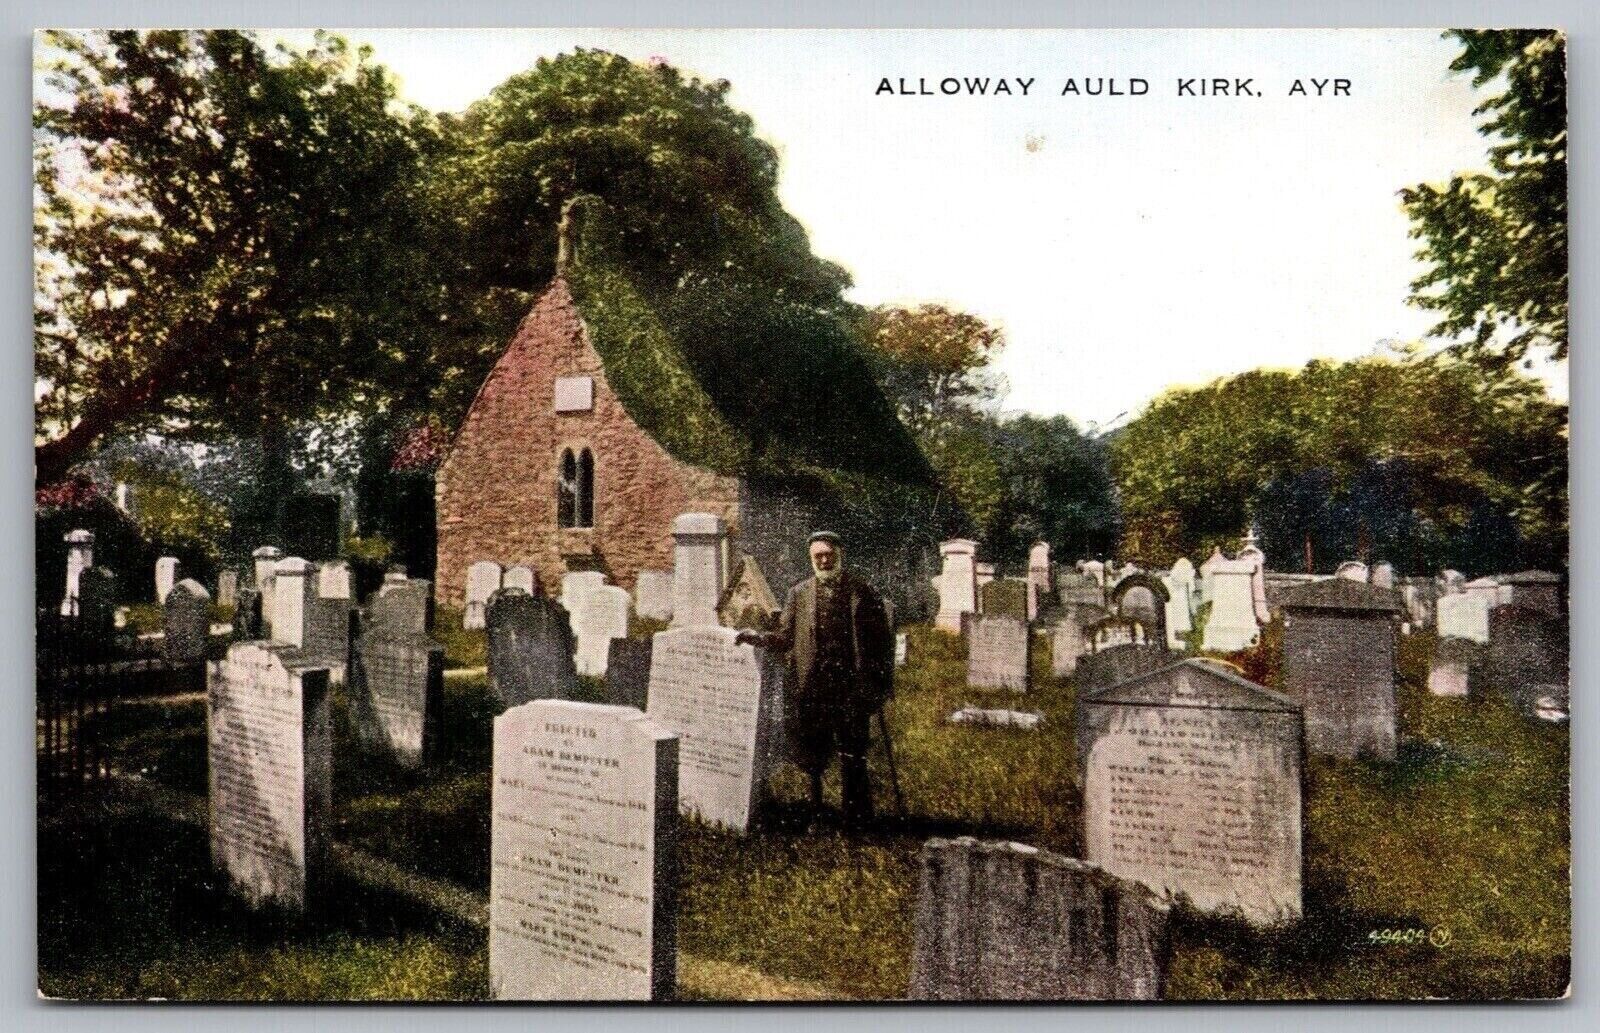 Alloqay Auld Kirk Ayr Scotland United Kingdom Cemetery Vintage UNP Postcard